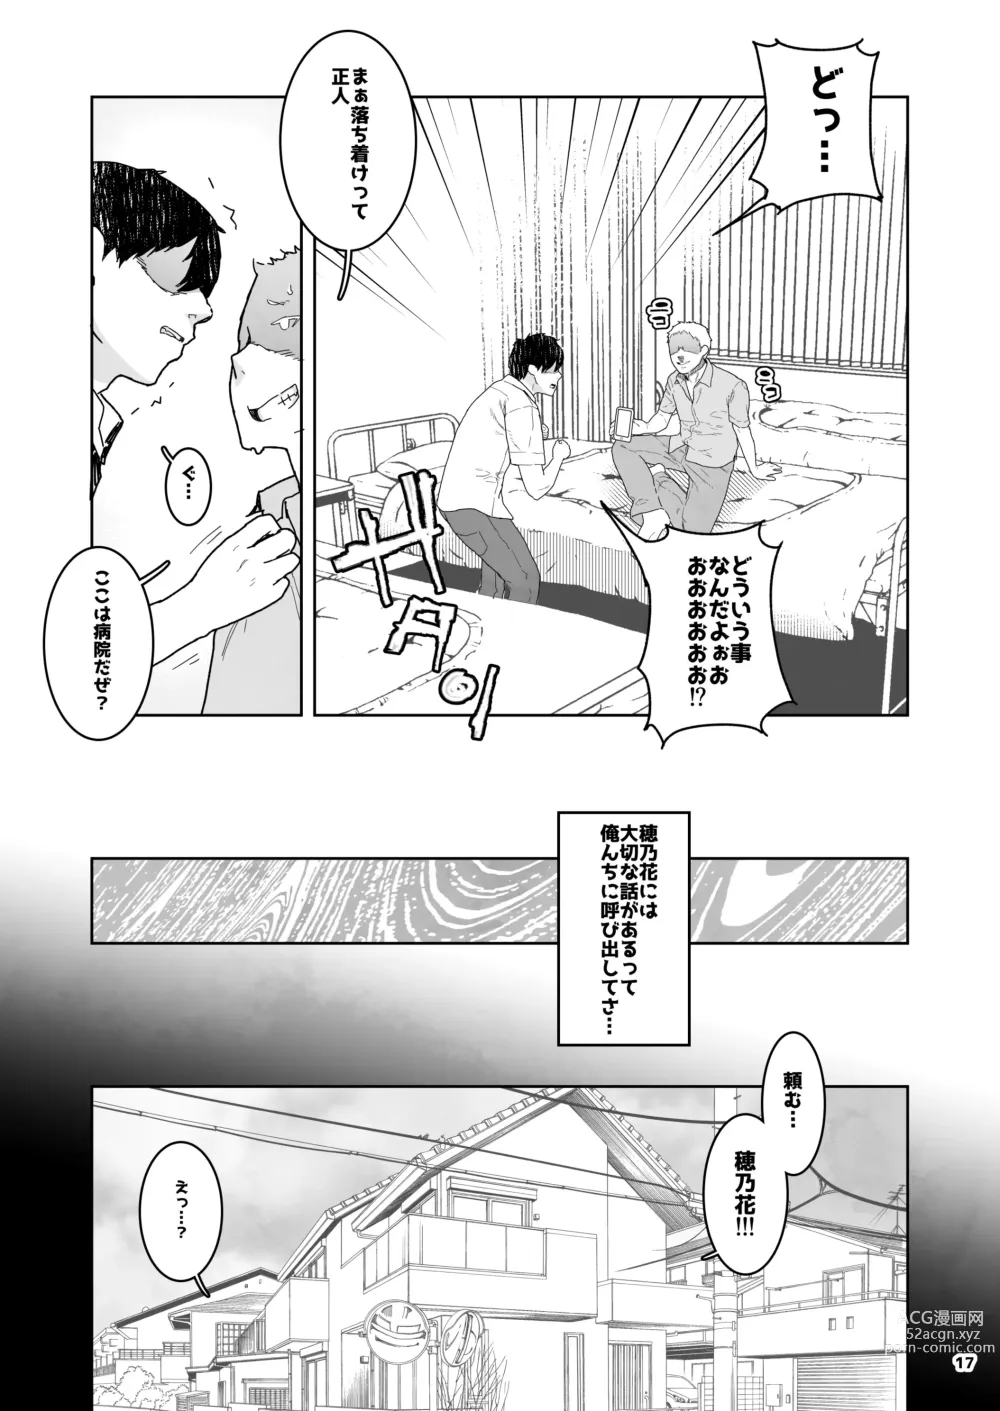 Page 17 of doujinshi Tomodachi no Shuwari